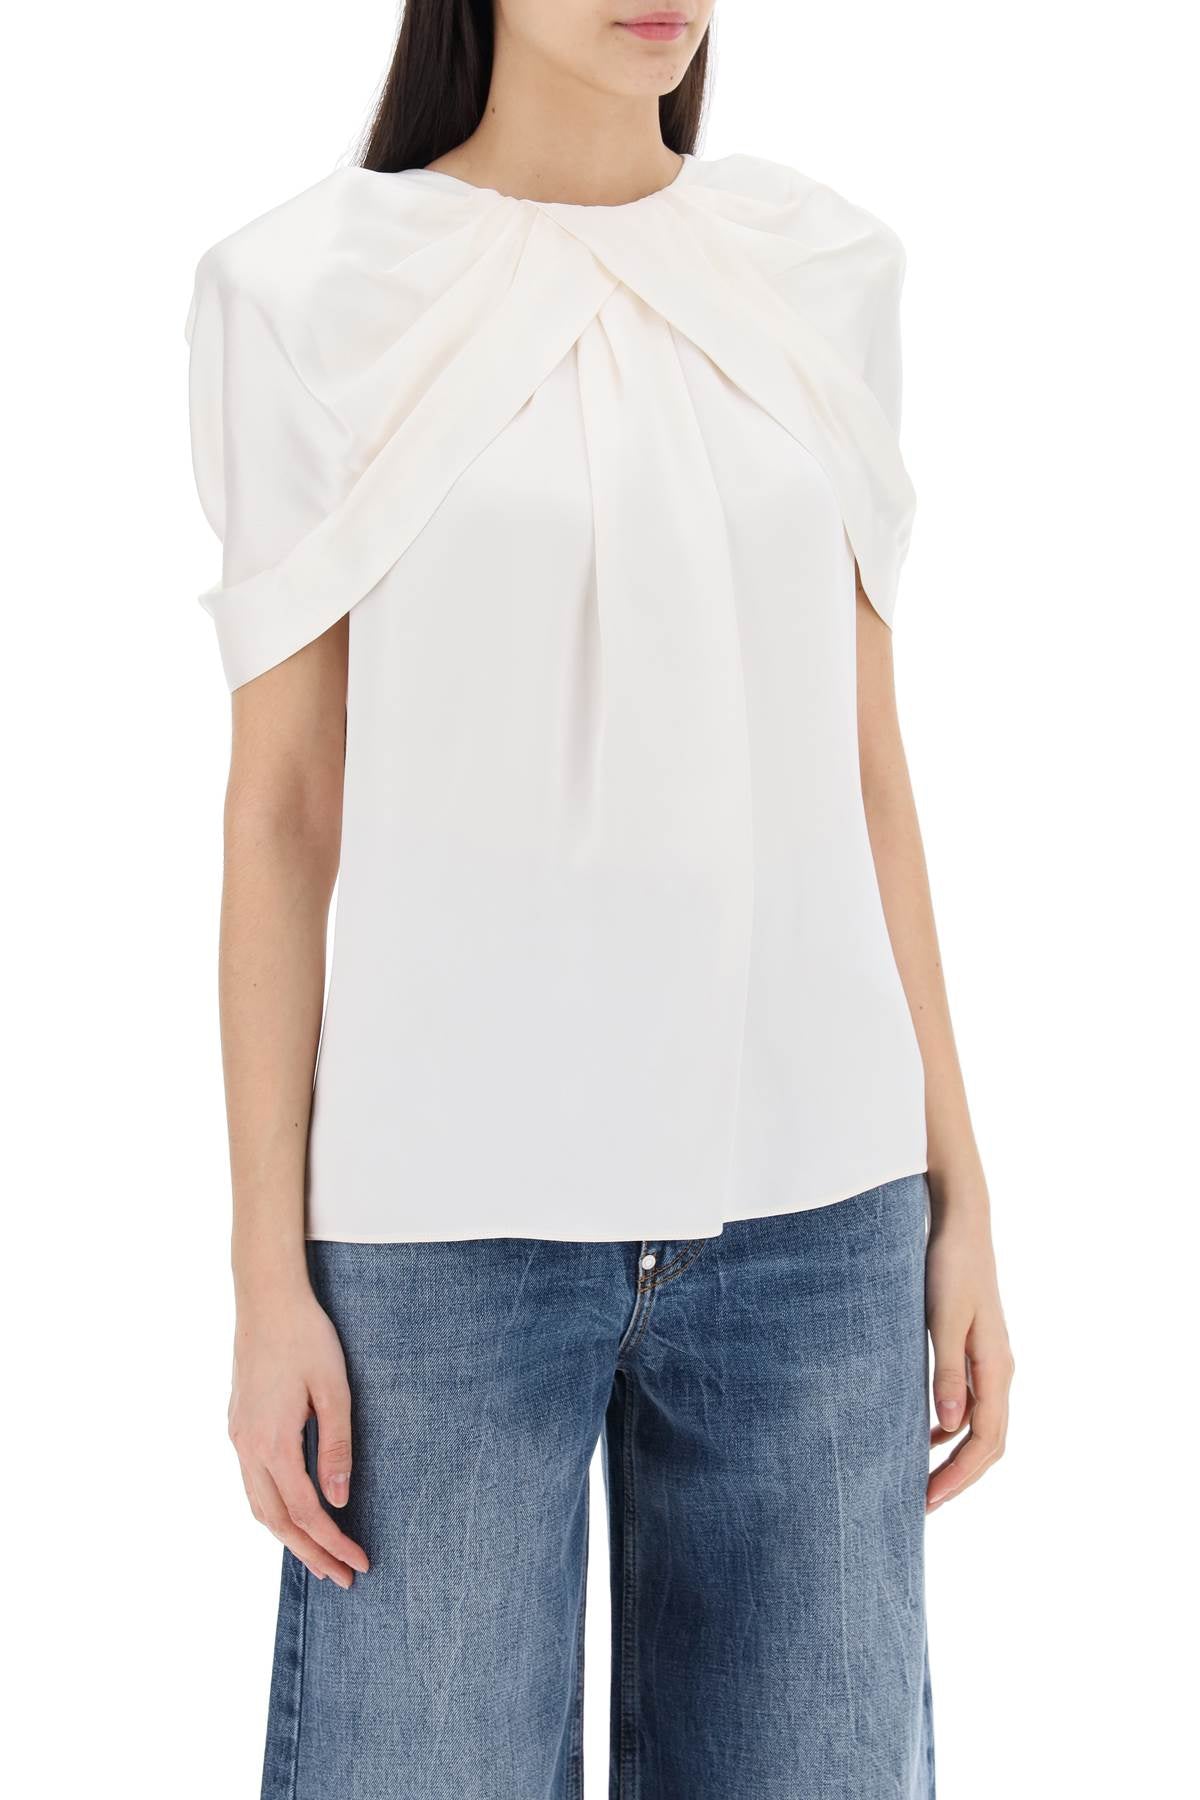 Stella mccartney satin blouse with petal sleeves-1